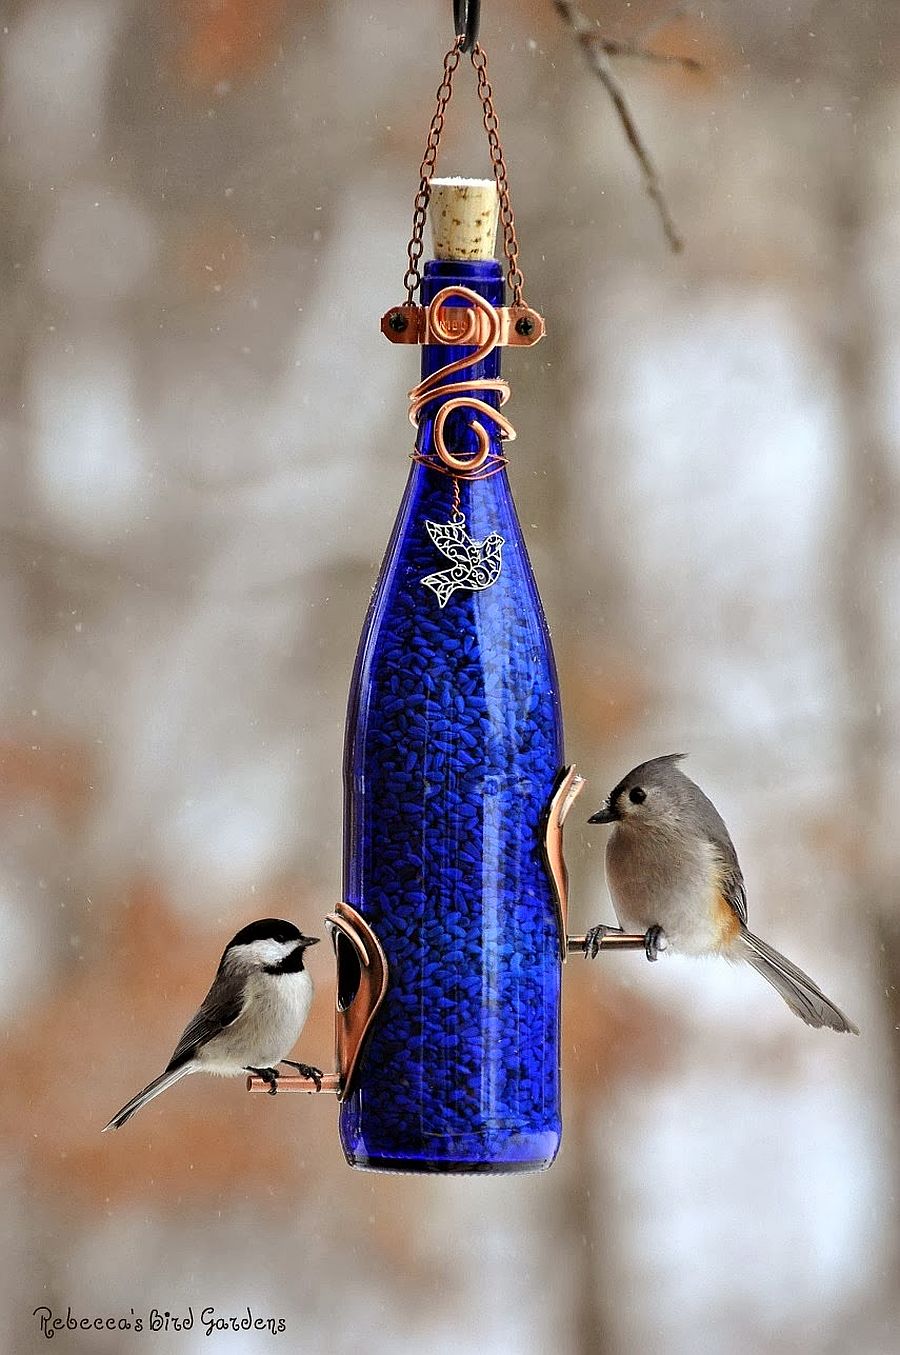 Wine bottle bird feeders add charm to your garden all on their own